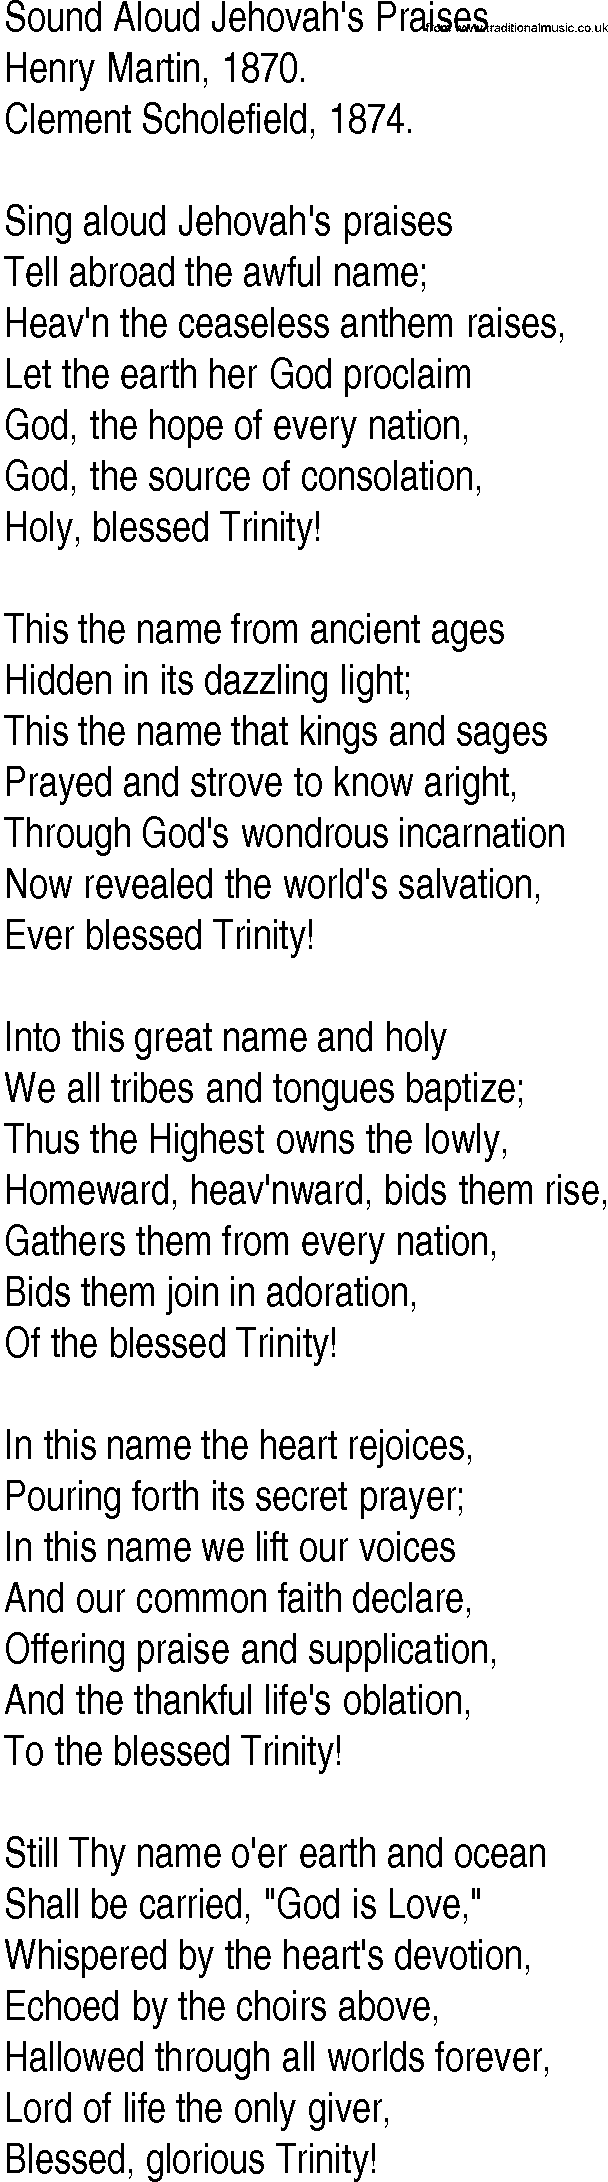 Hymn and Gospel Song: Sound Aloud Jehovah's Praises by Henry Martin lyrics